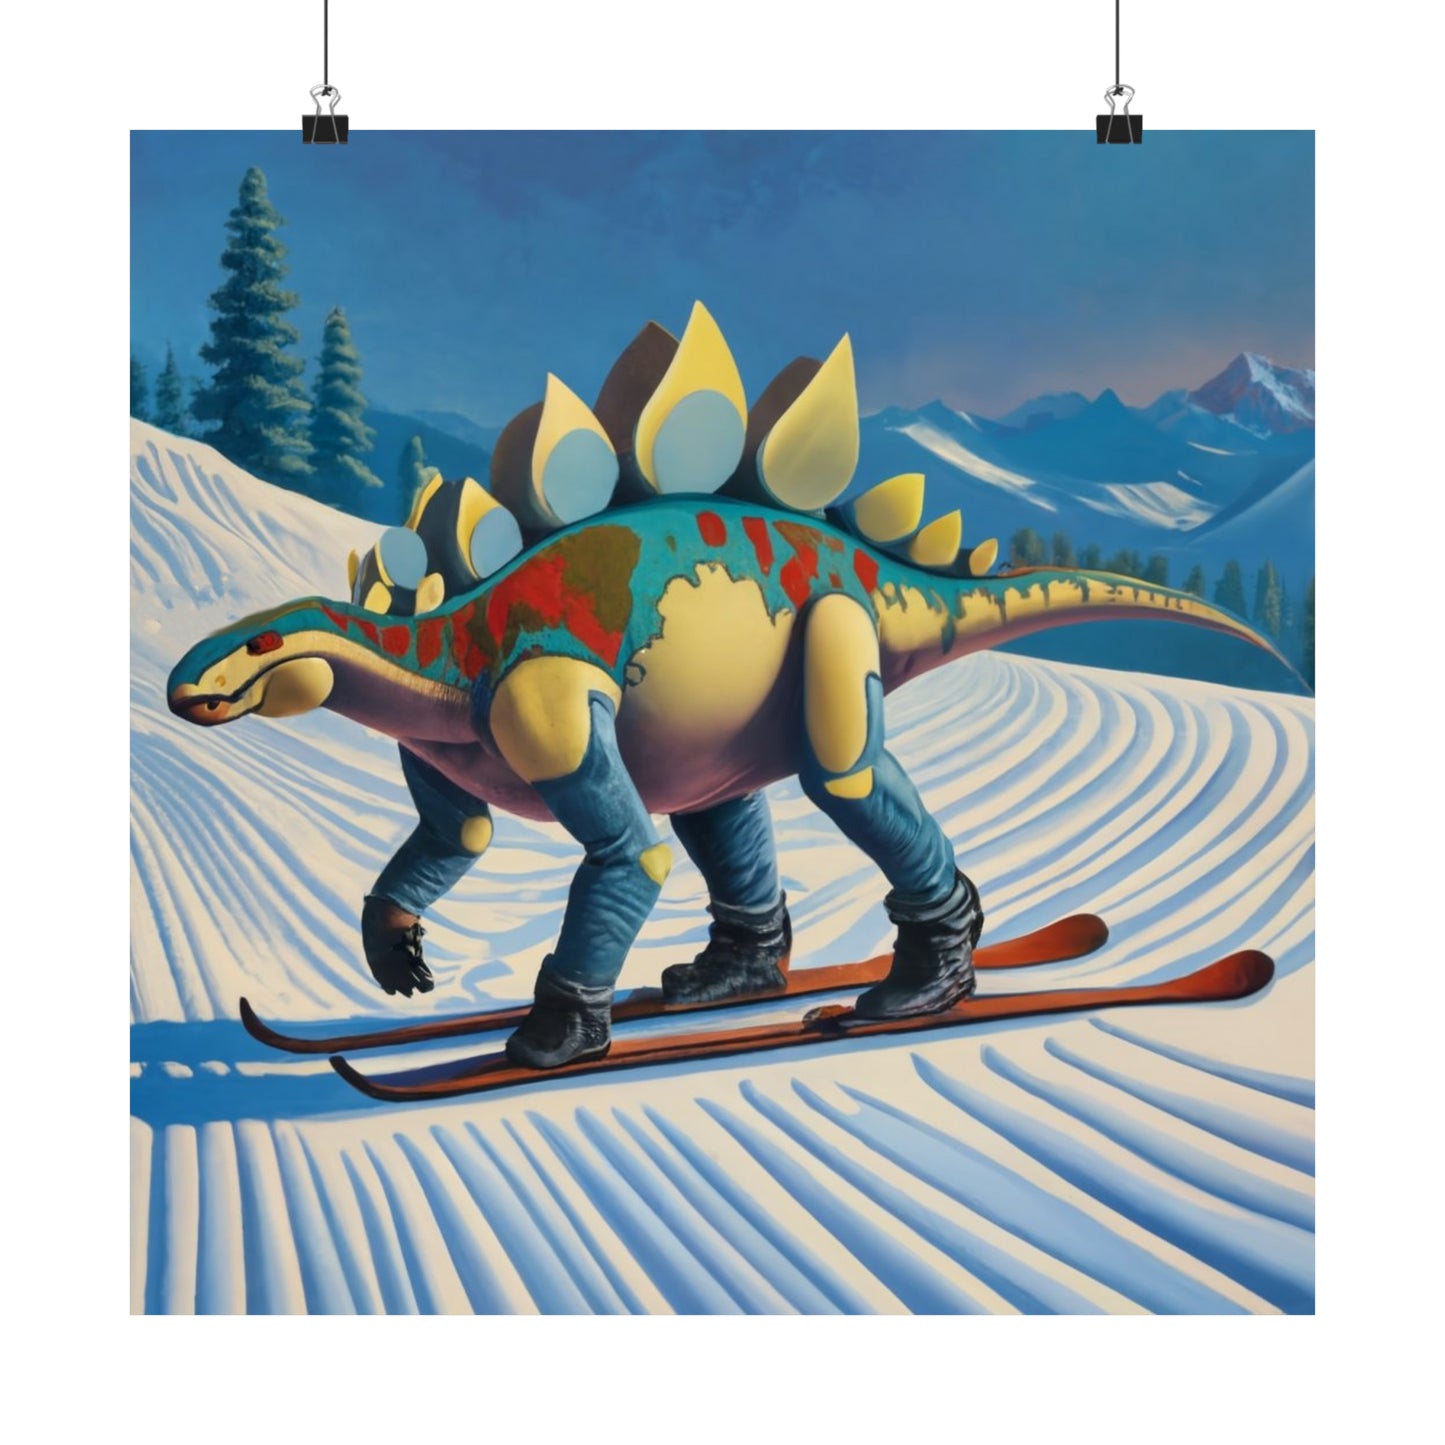 Stego-Slopes: Skiing Stegosaurus Wall Art